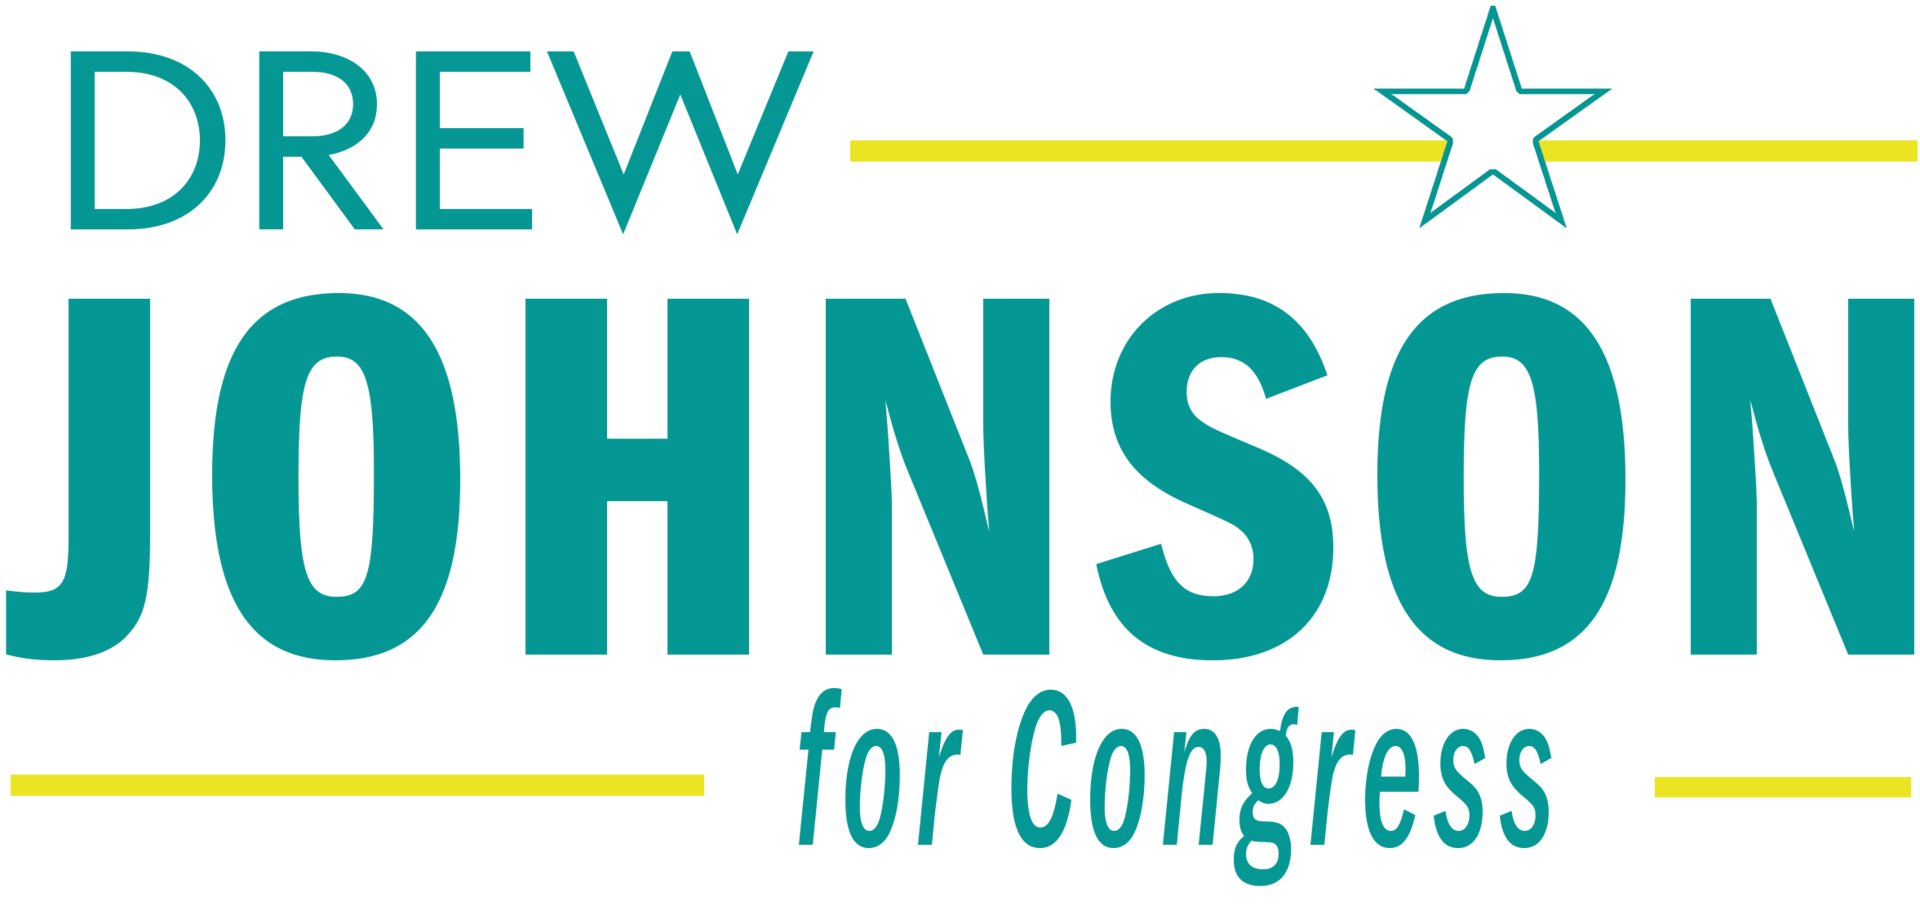 Drew johnson for congress logo color simple